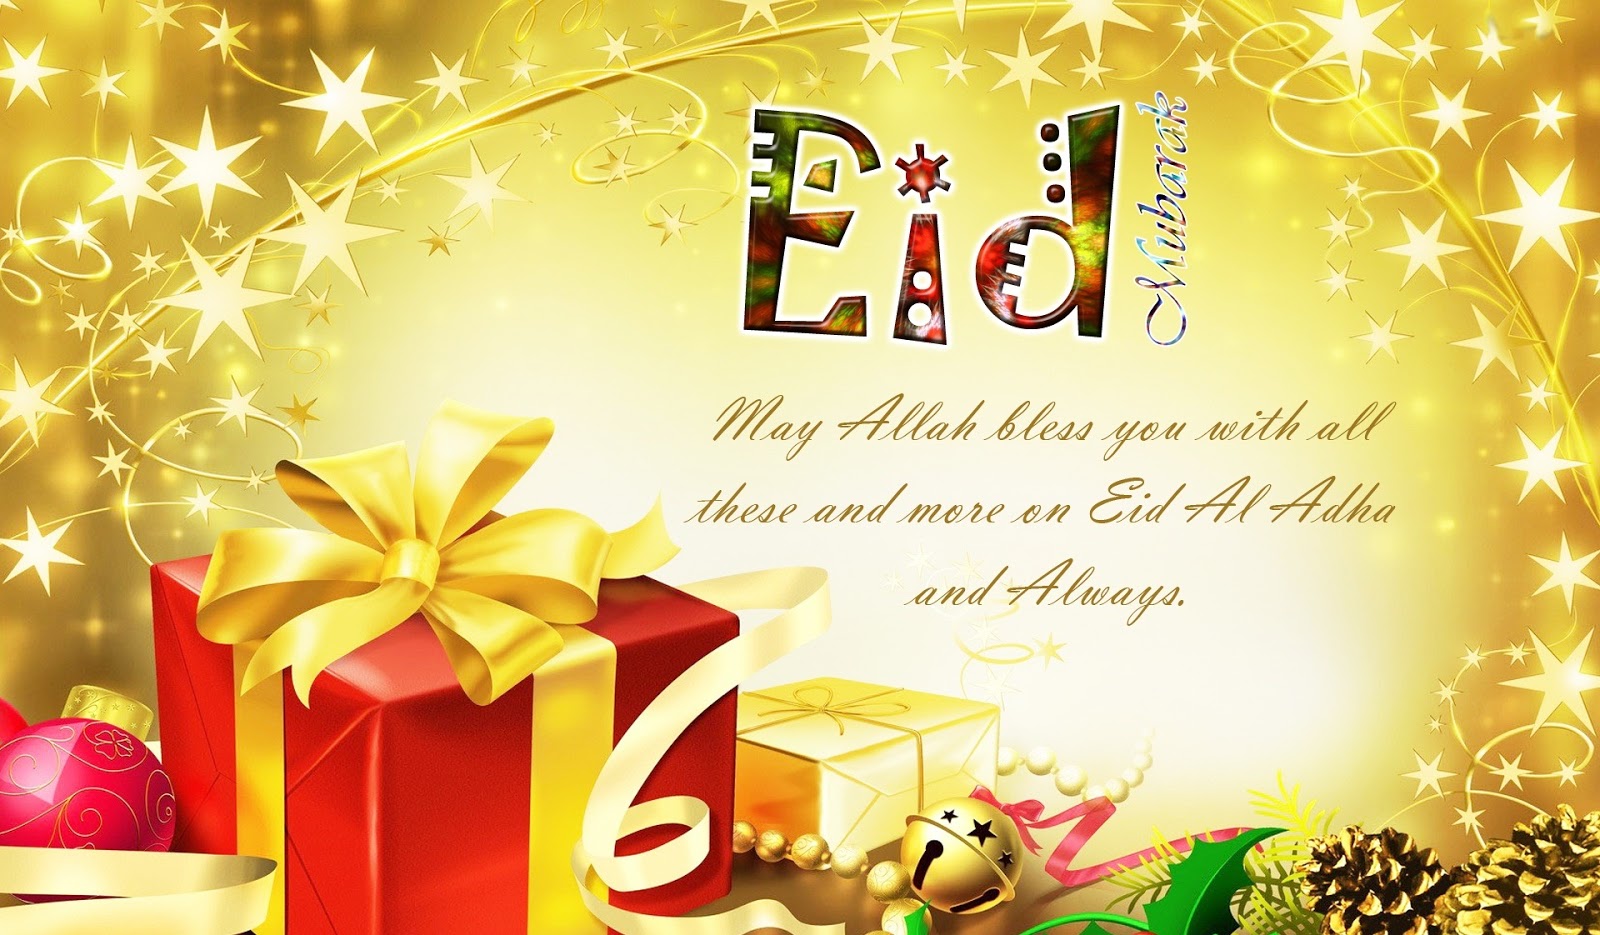 Happy Eid Mubarak SMS Messages 2018 - FestiFit